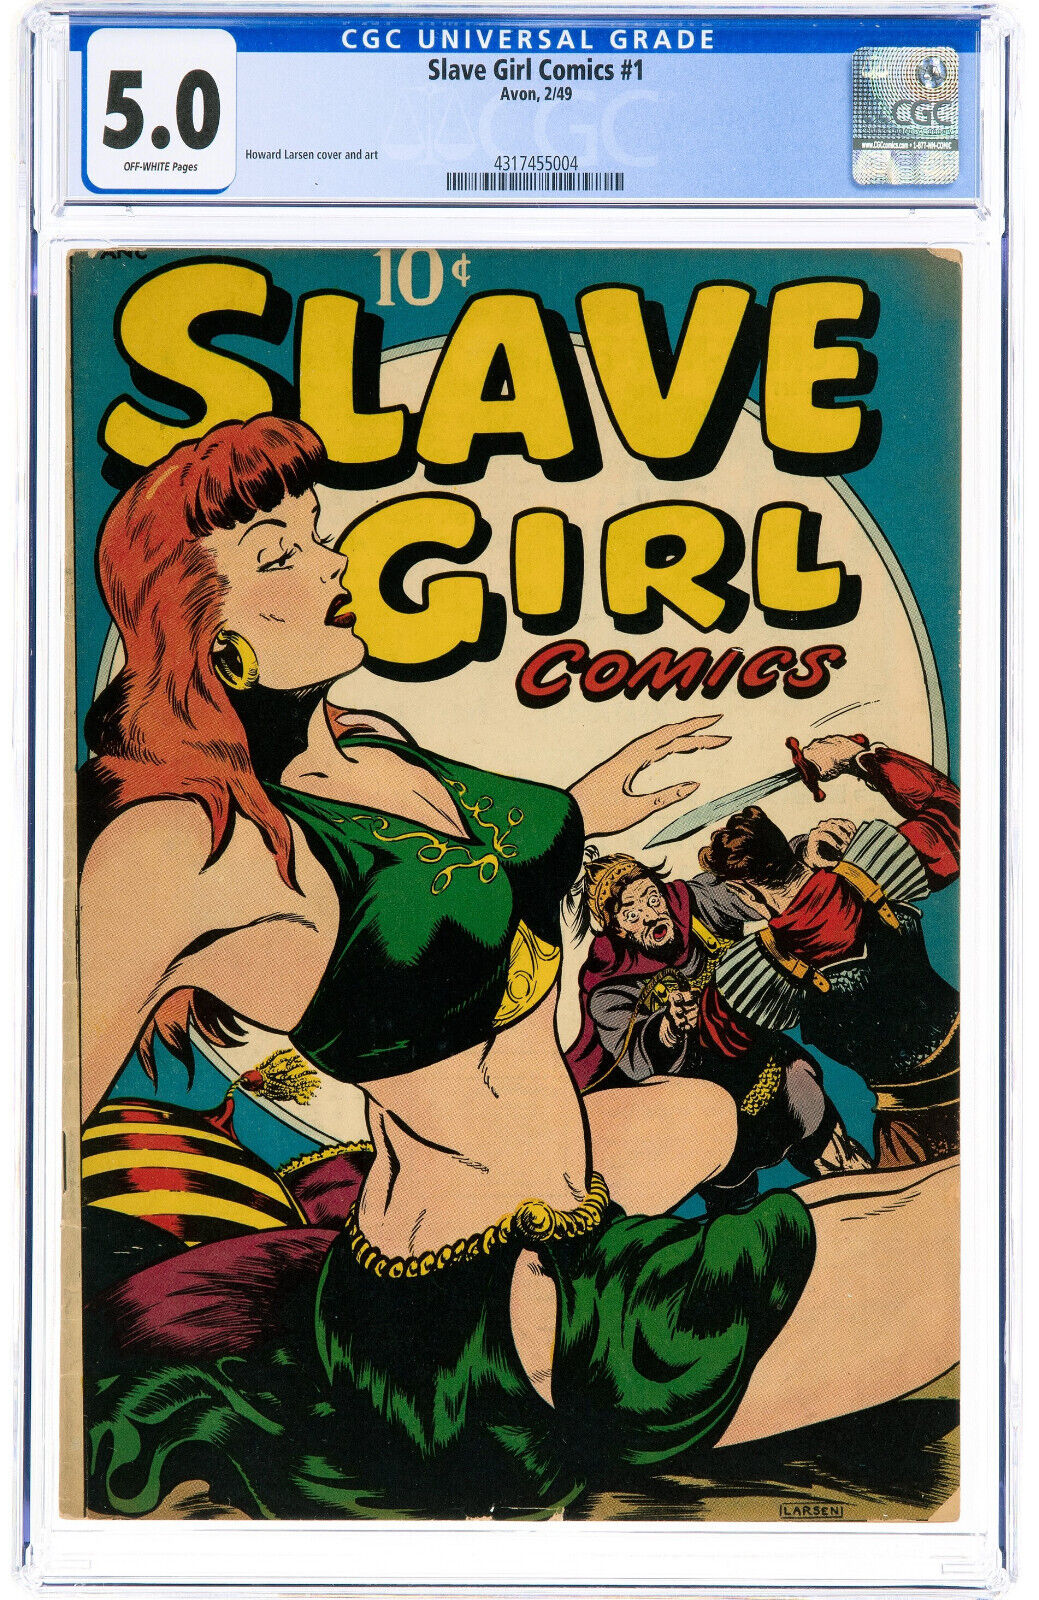 Slave Girl Comic #1 CGC 5.0 AVON PUB 1949 LARSON CVR No Writing P12 434 cm